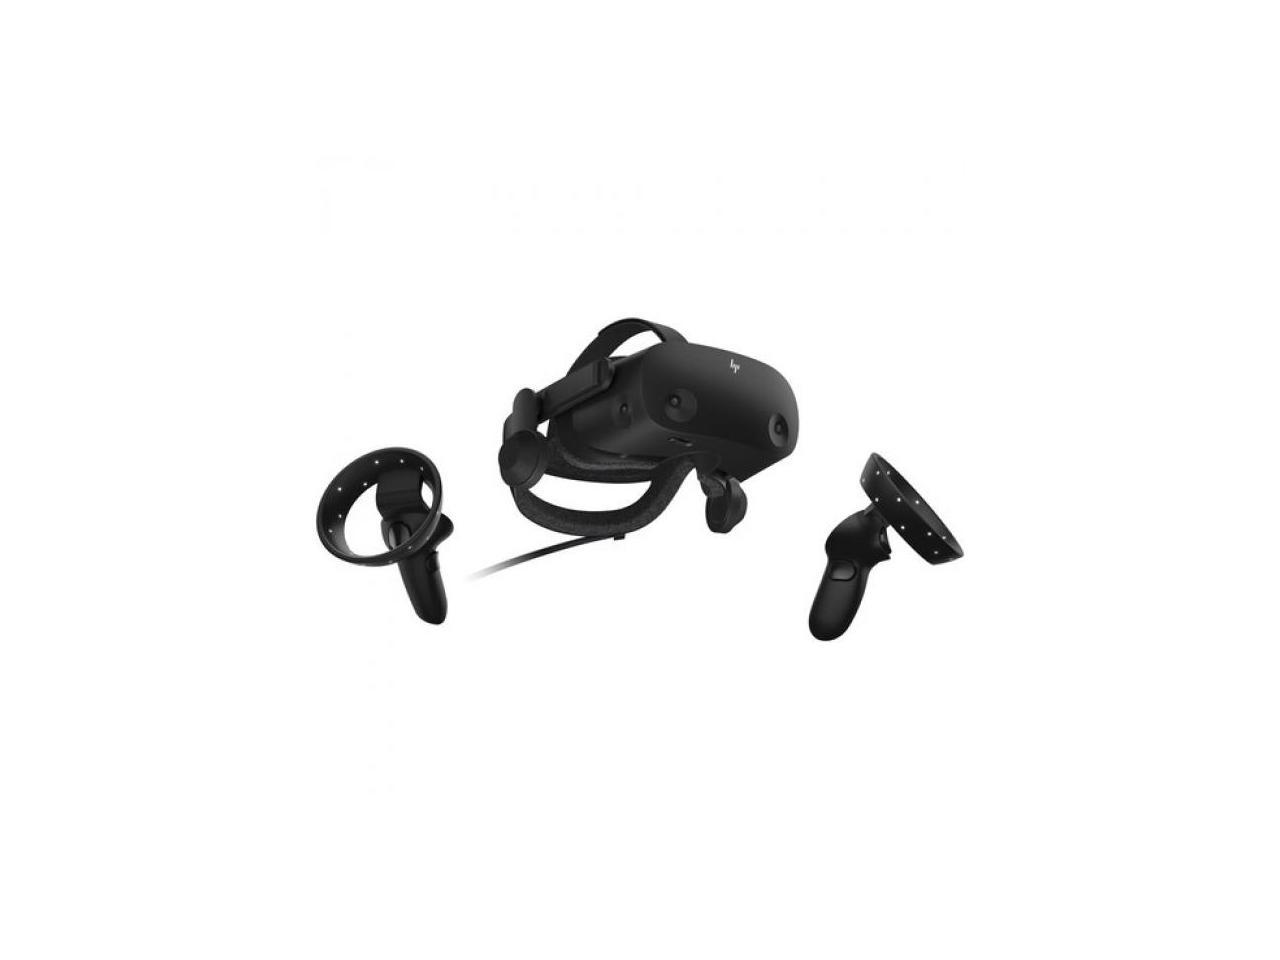 HP Reverb G2 VR Headset with Controller - Newegg.com